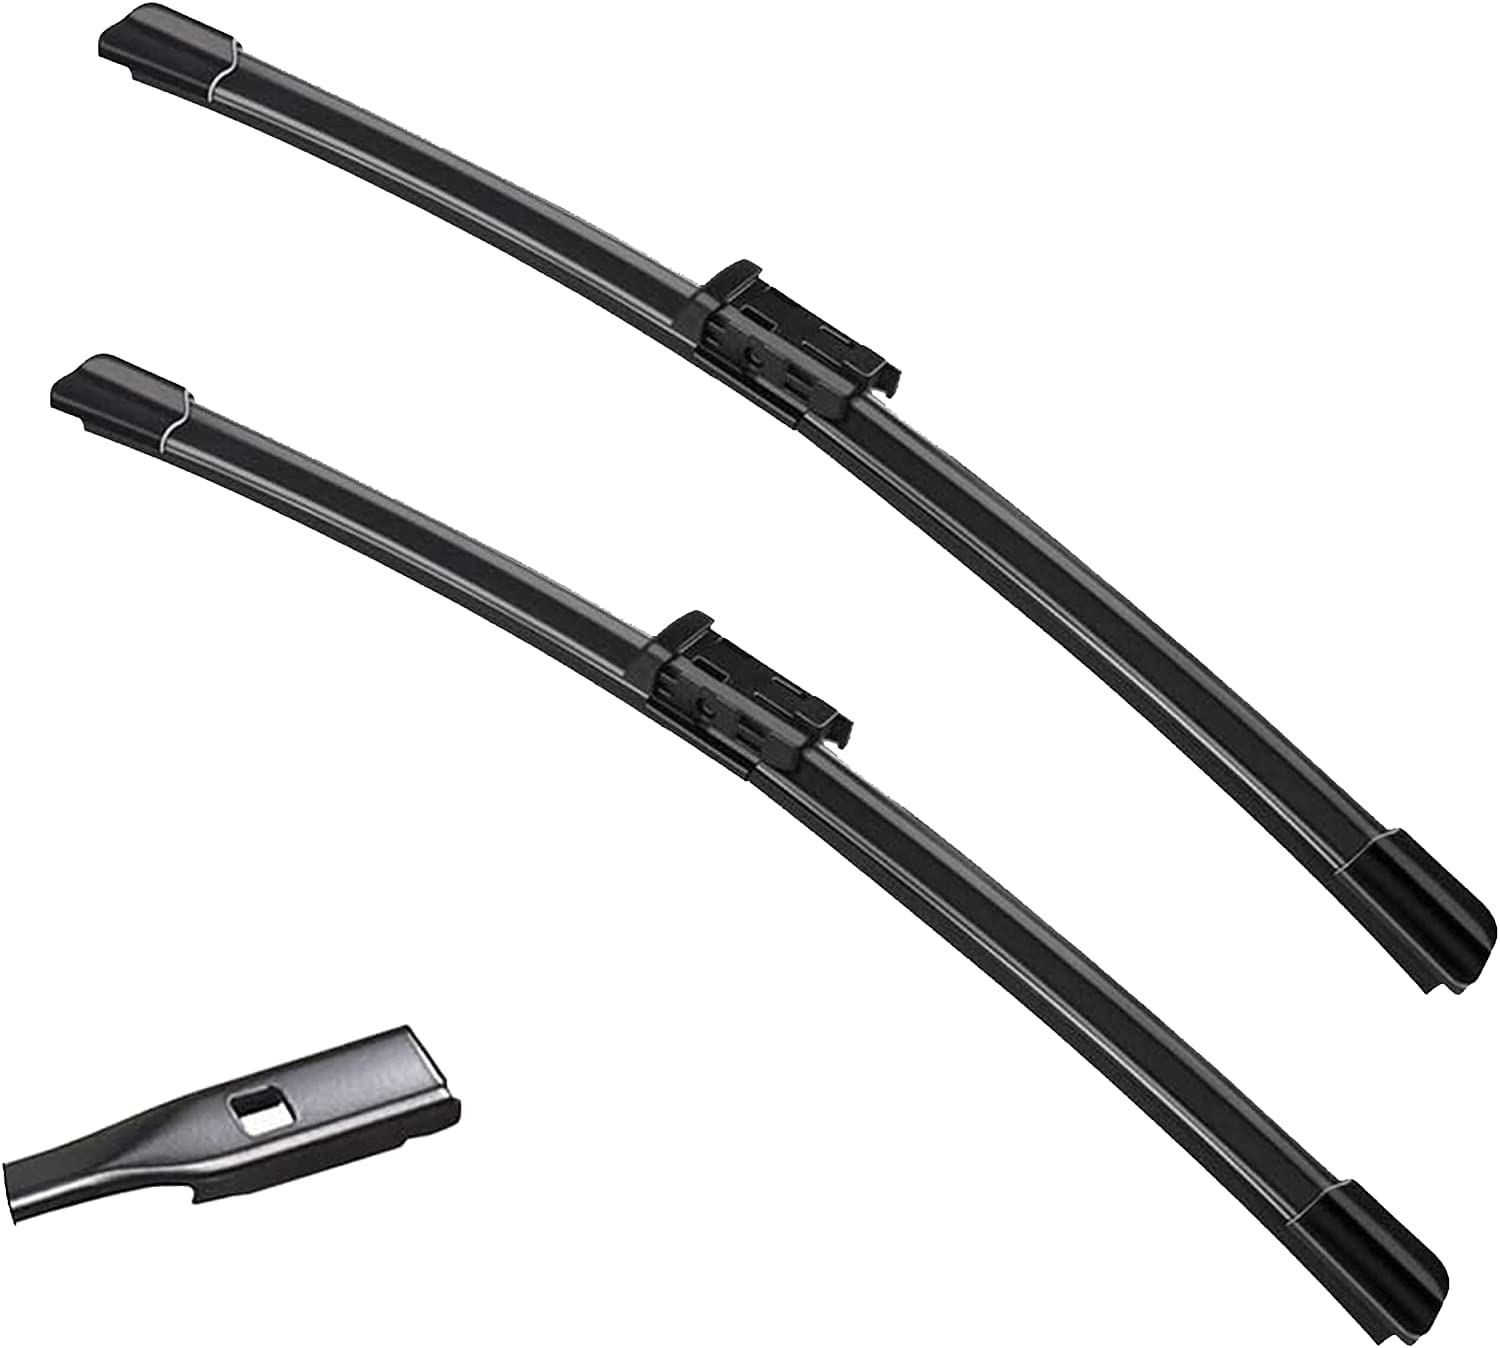 2 Factory Wiper Blades Replacement for Silverado Sierra 04/03/2014-2018 Original Equipment Windshield Wiper Blades Set – 22″+22″ (Set of 2) Top Lock